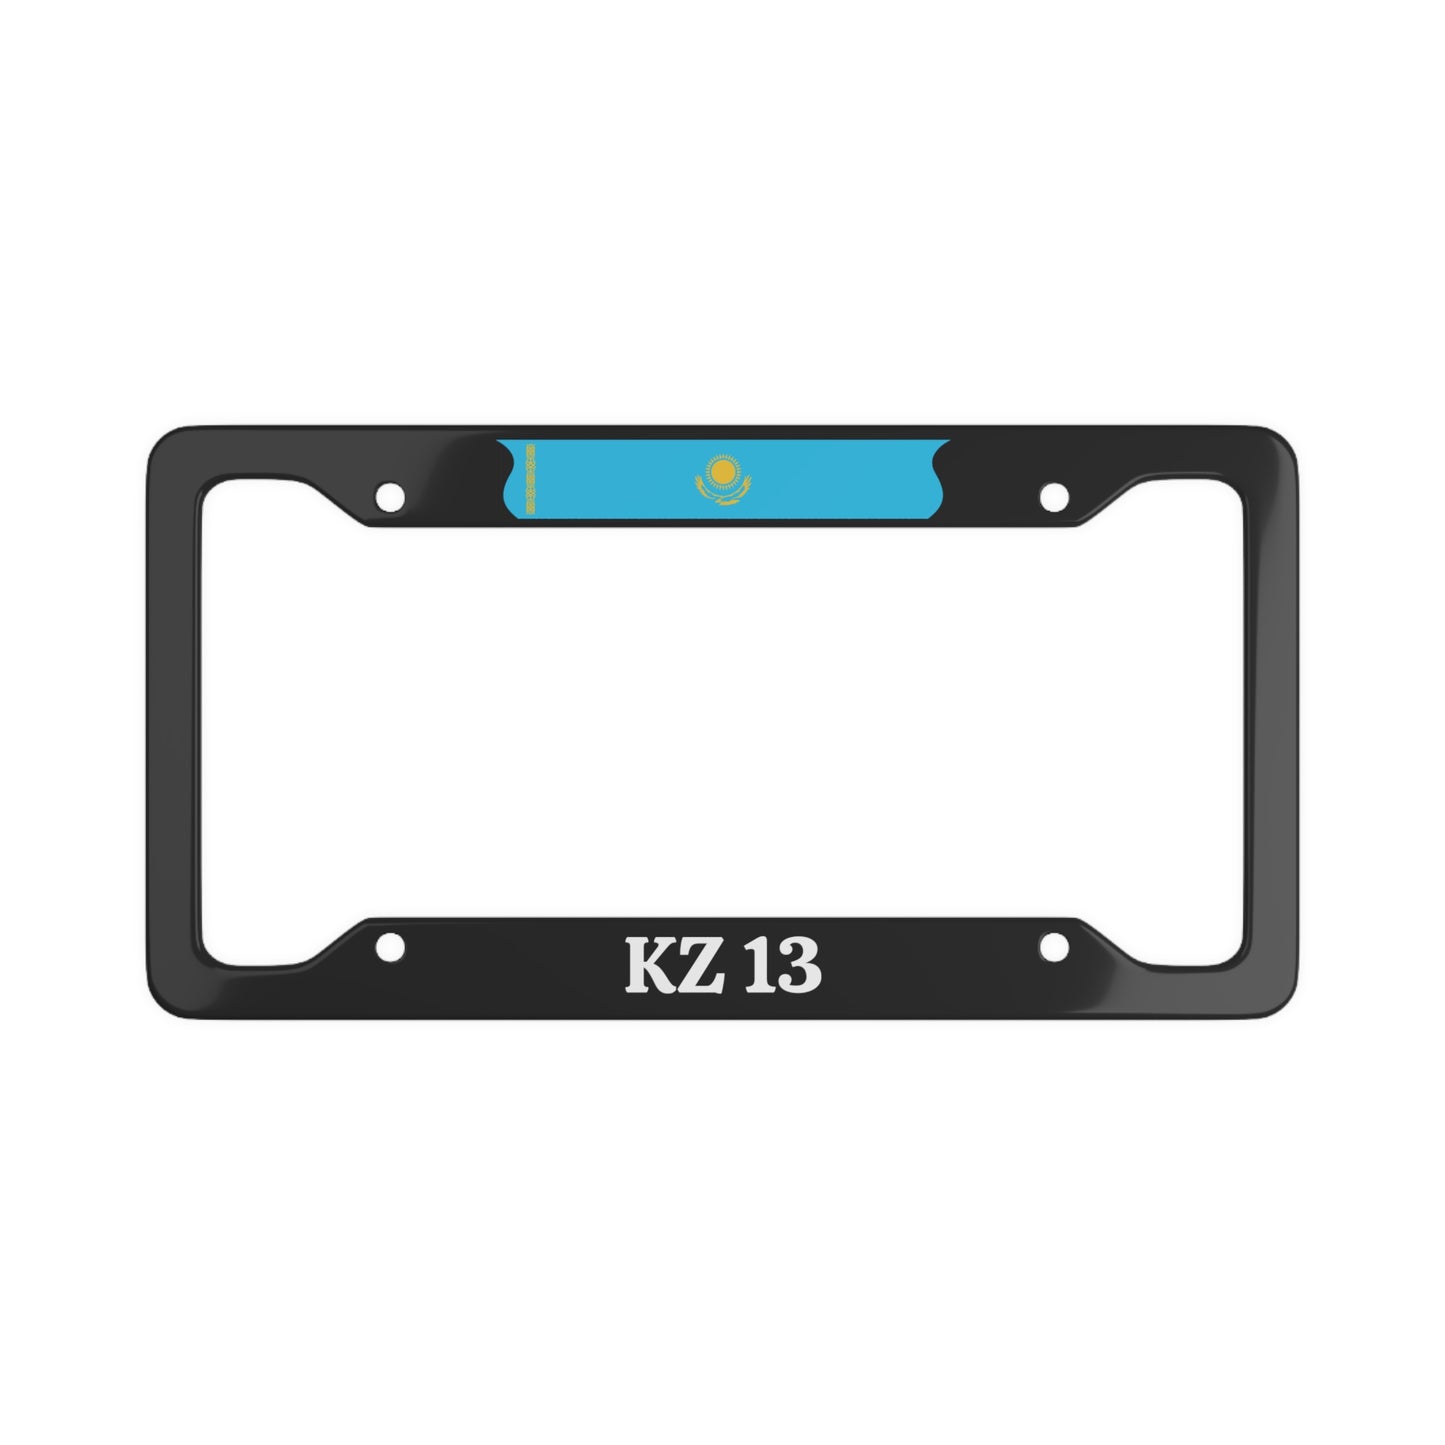 KZ 13 License Plate Frame